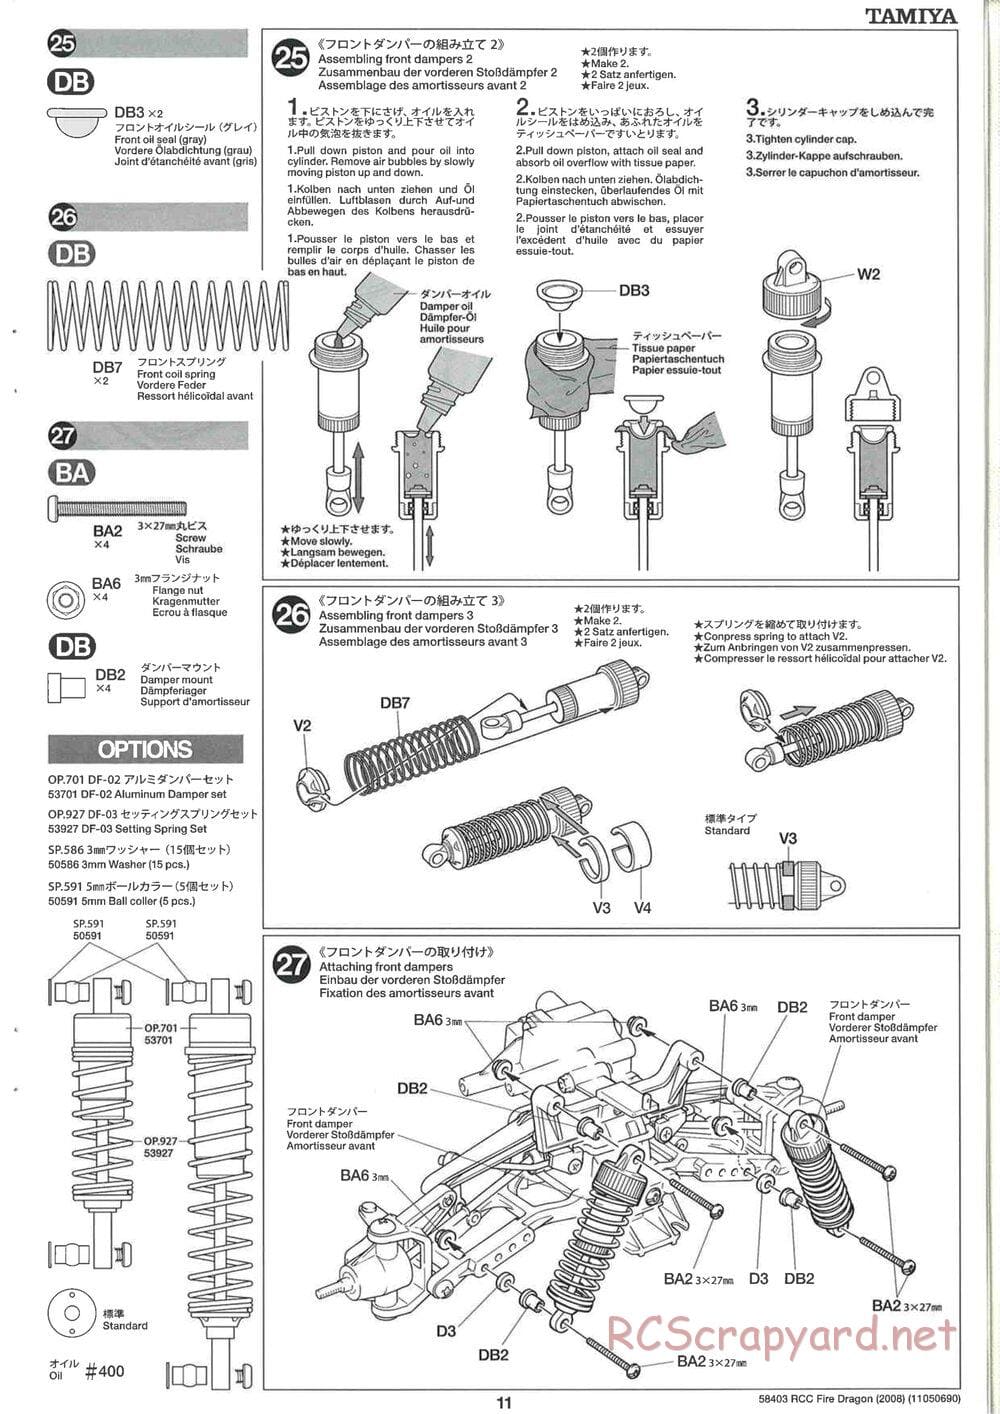 Tamiya - Fire Dragon 2008 - TS2 Chassis - Manual - Page 11